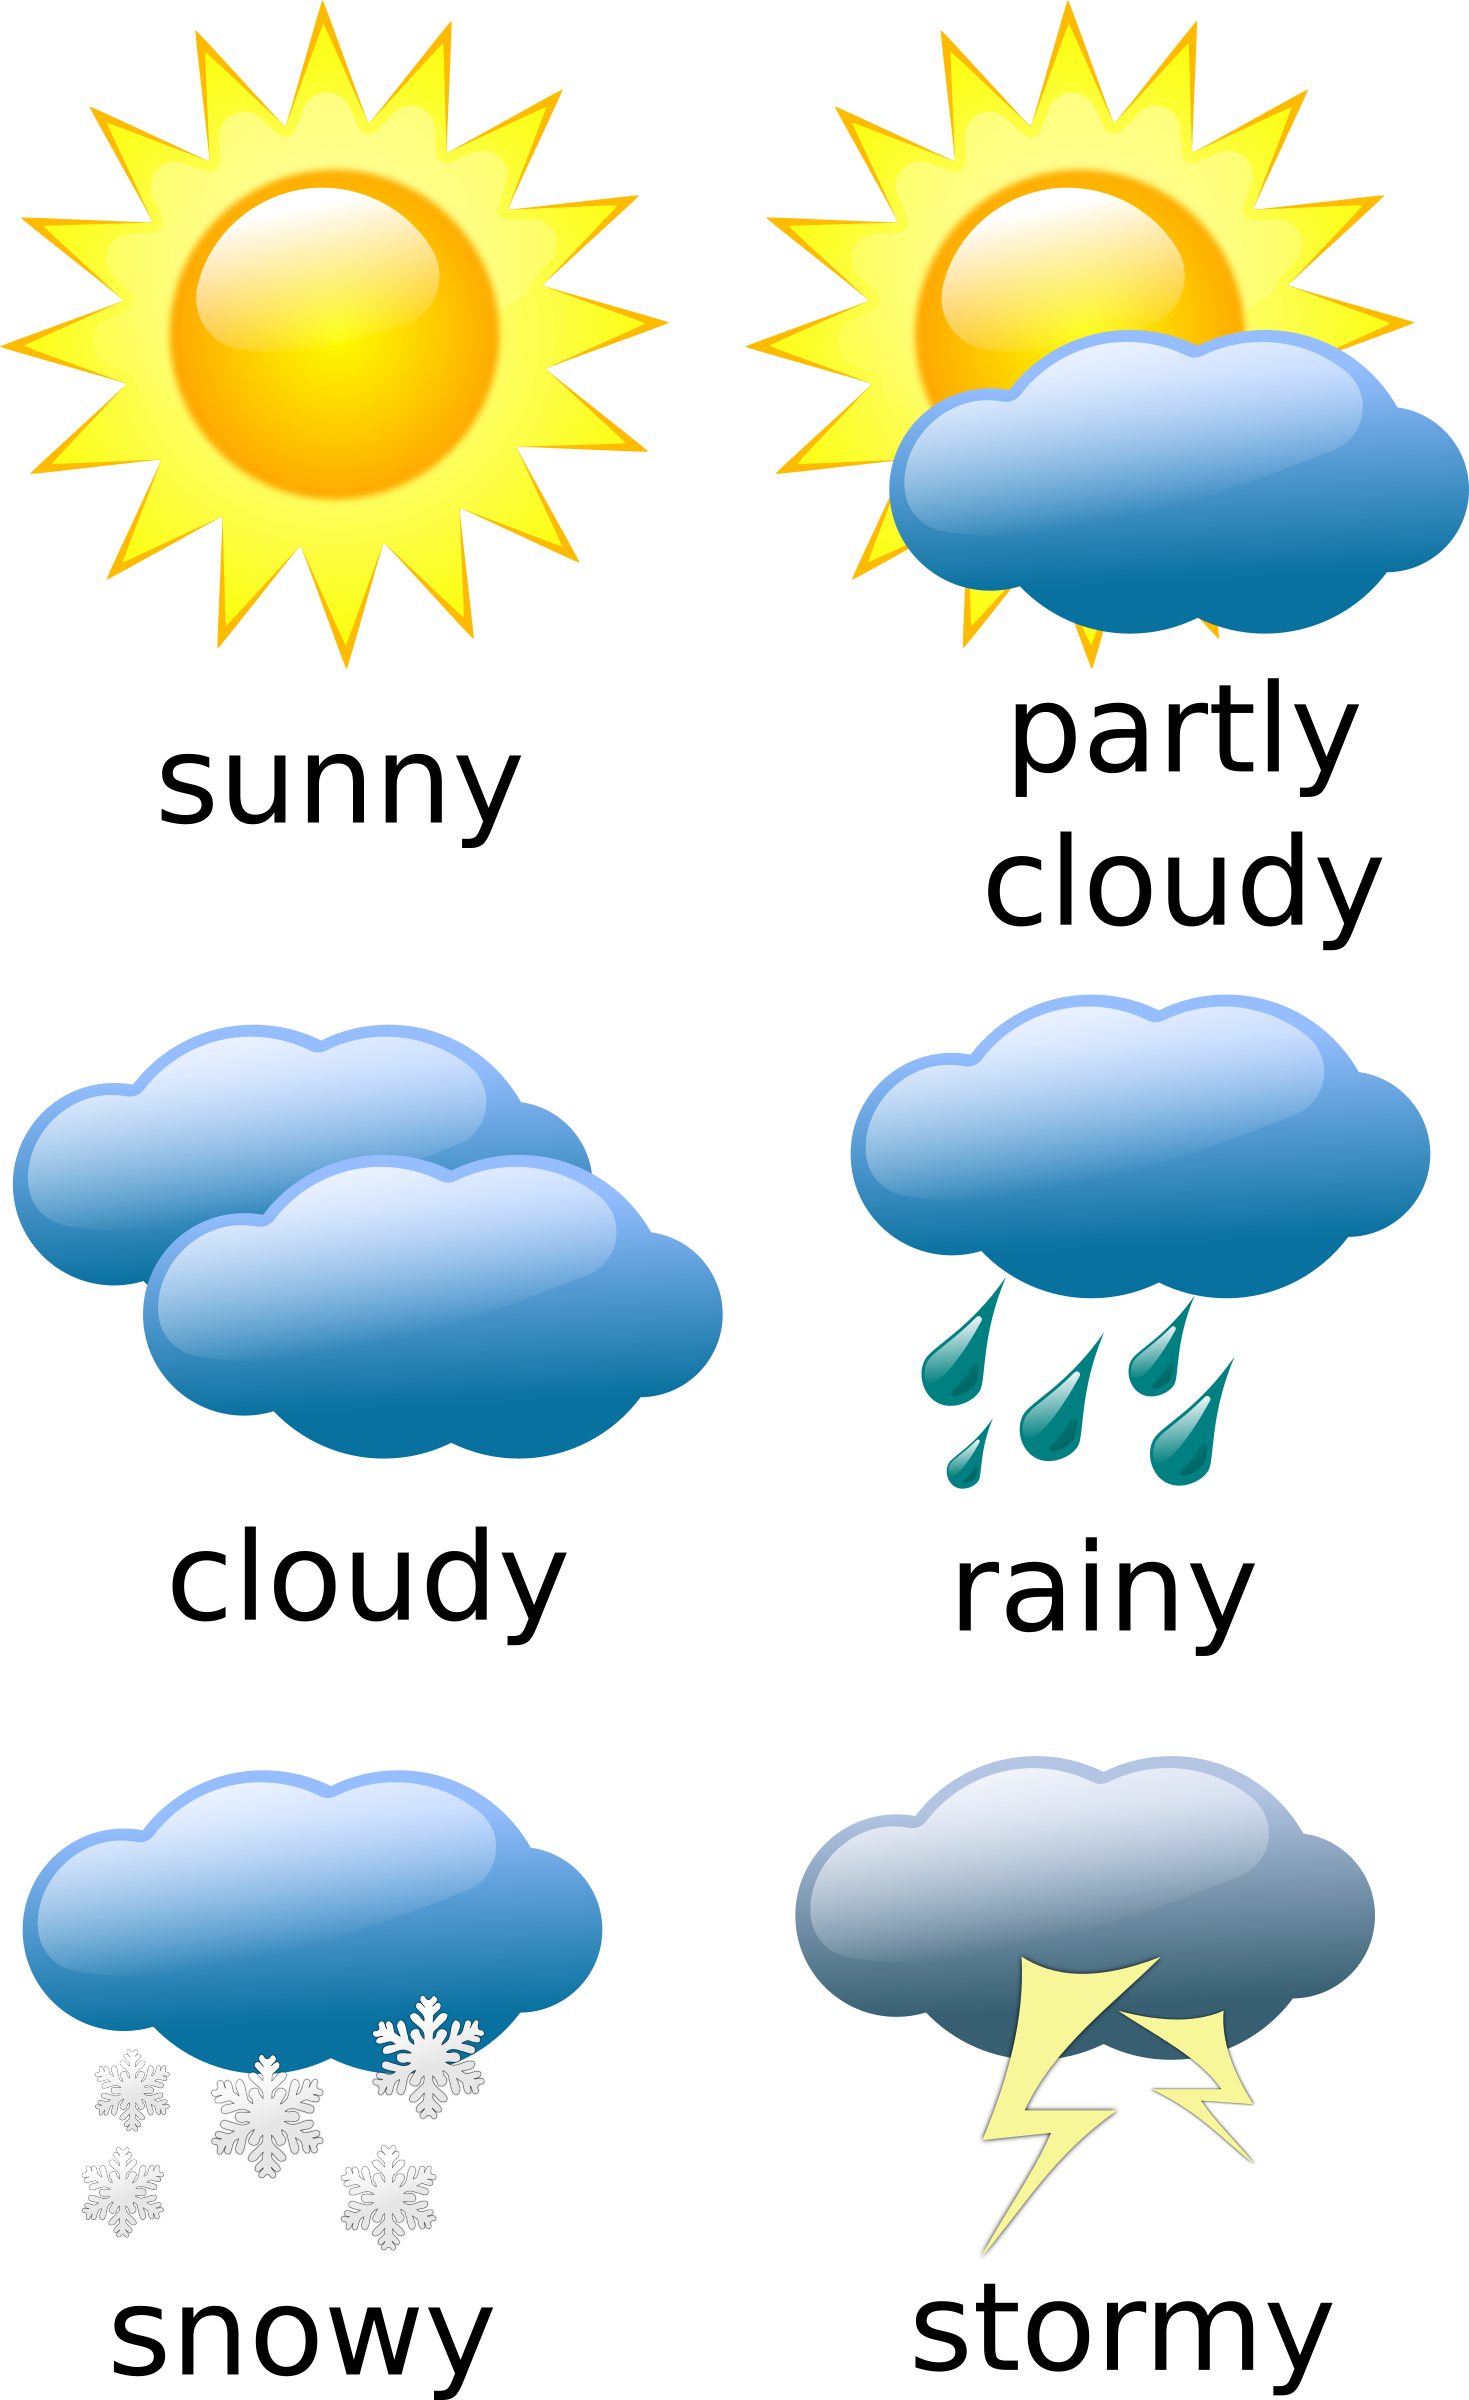 Weather Chart Cartoon